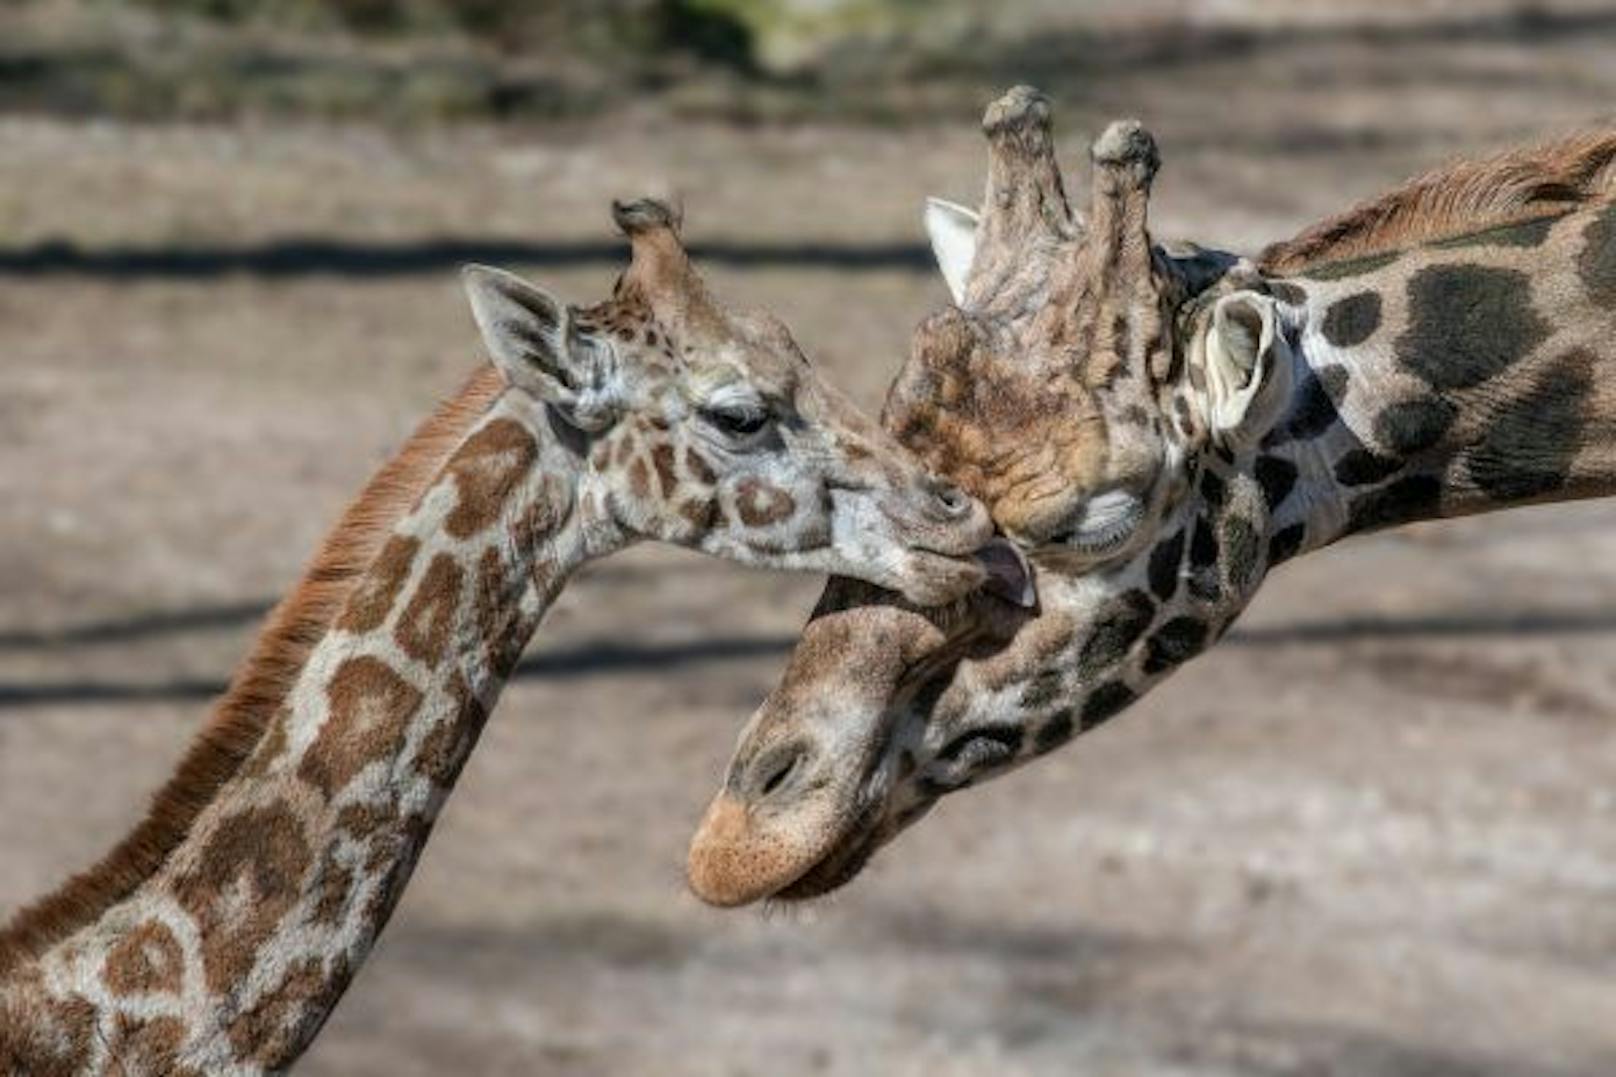 Besucherliebling ist Giraffenbulle "Nuka".